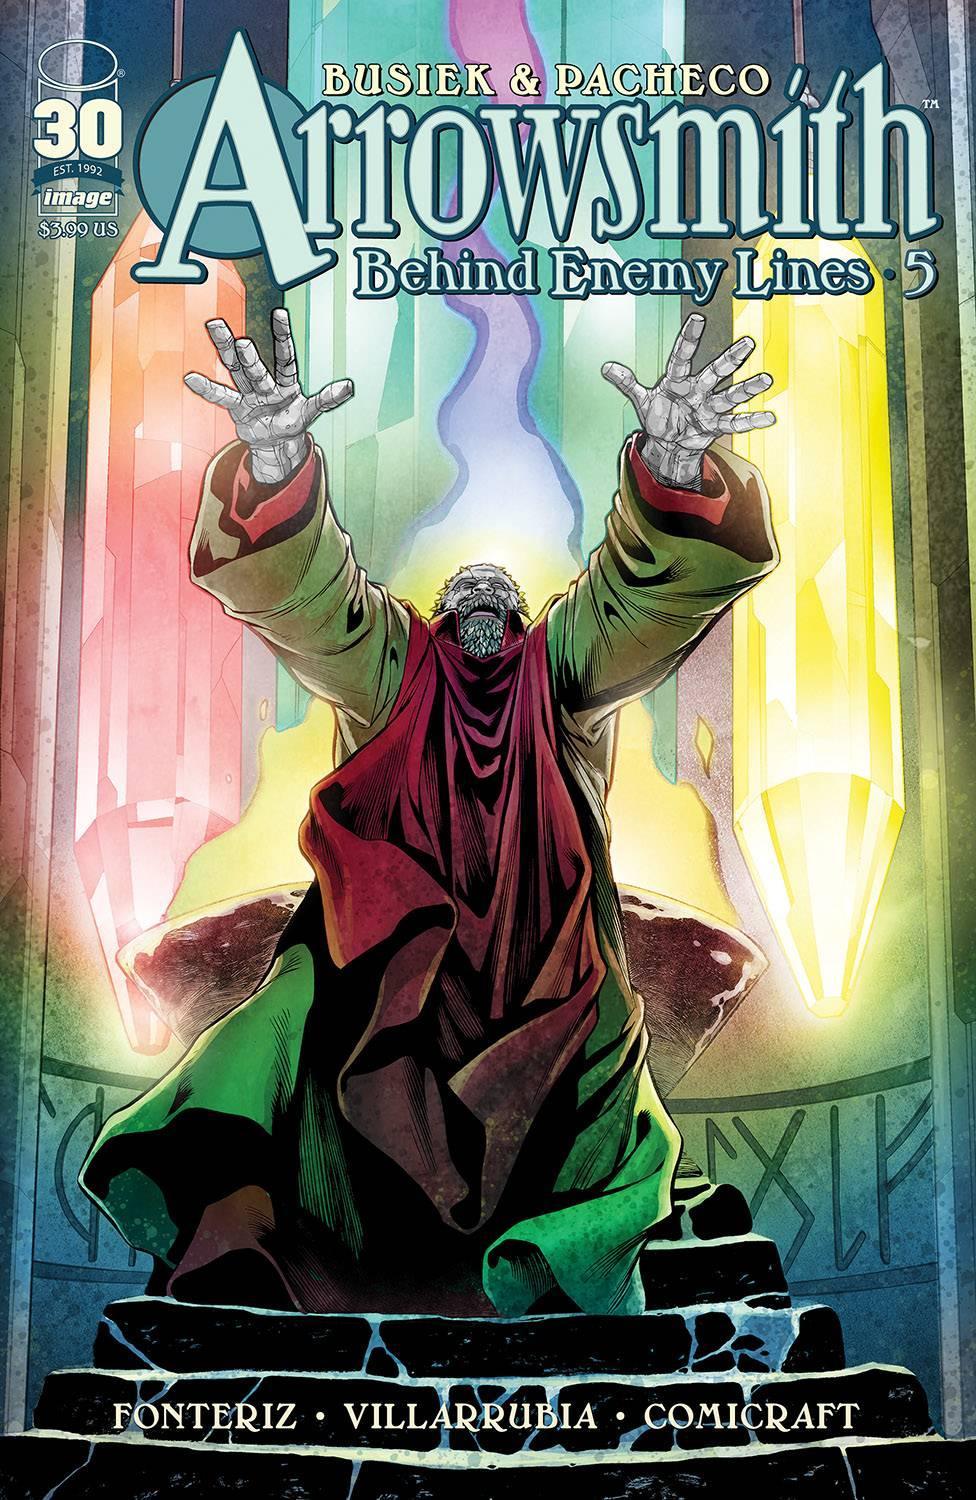 ARROWSMITH VOL 2 #5 CVR A PACHECO FONTERIZ VILLARRUBIA - Kings Comics